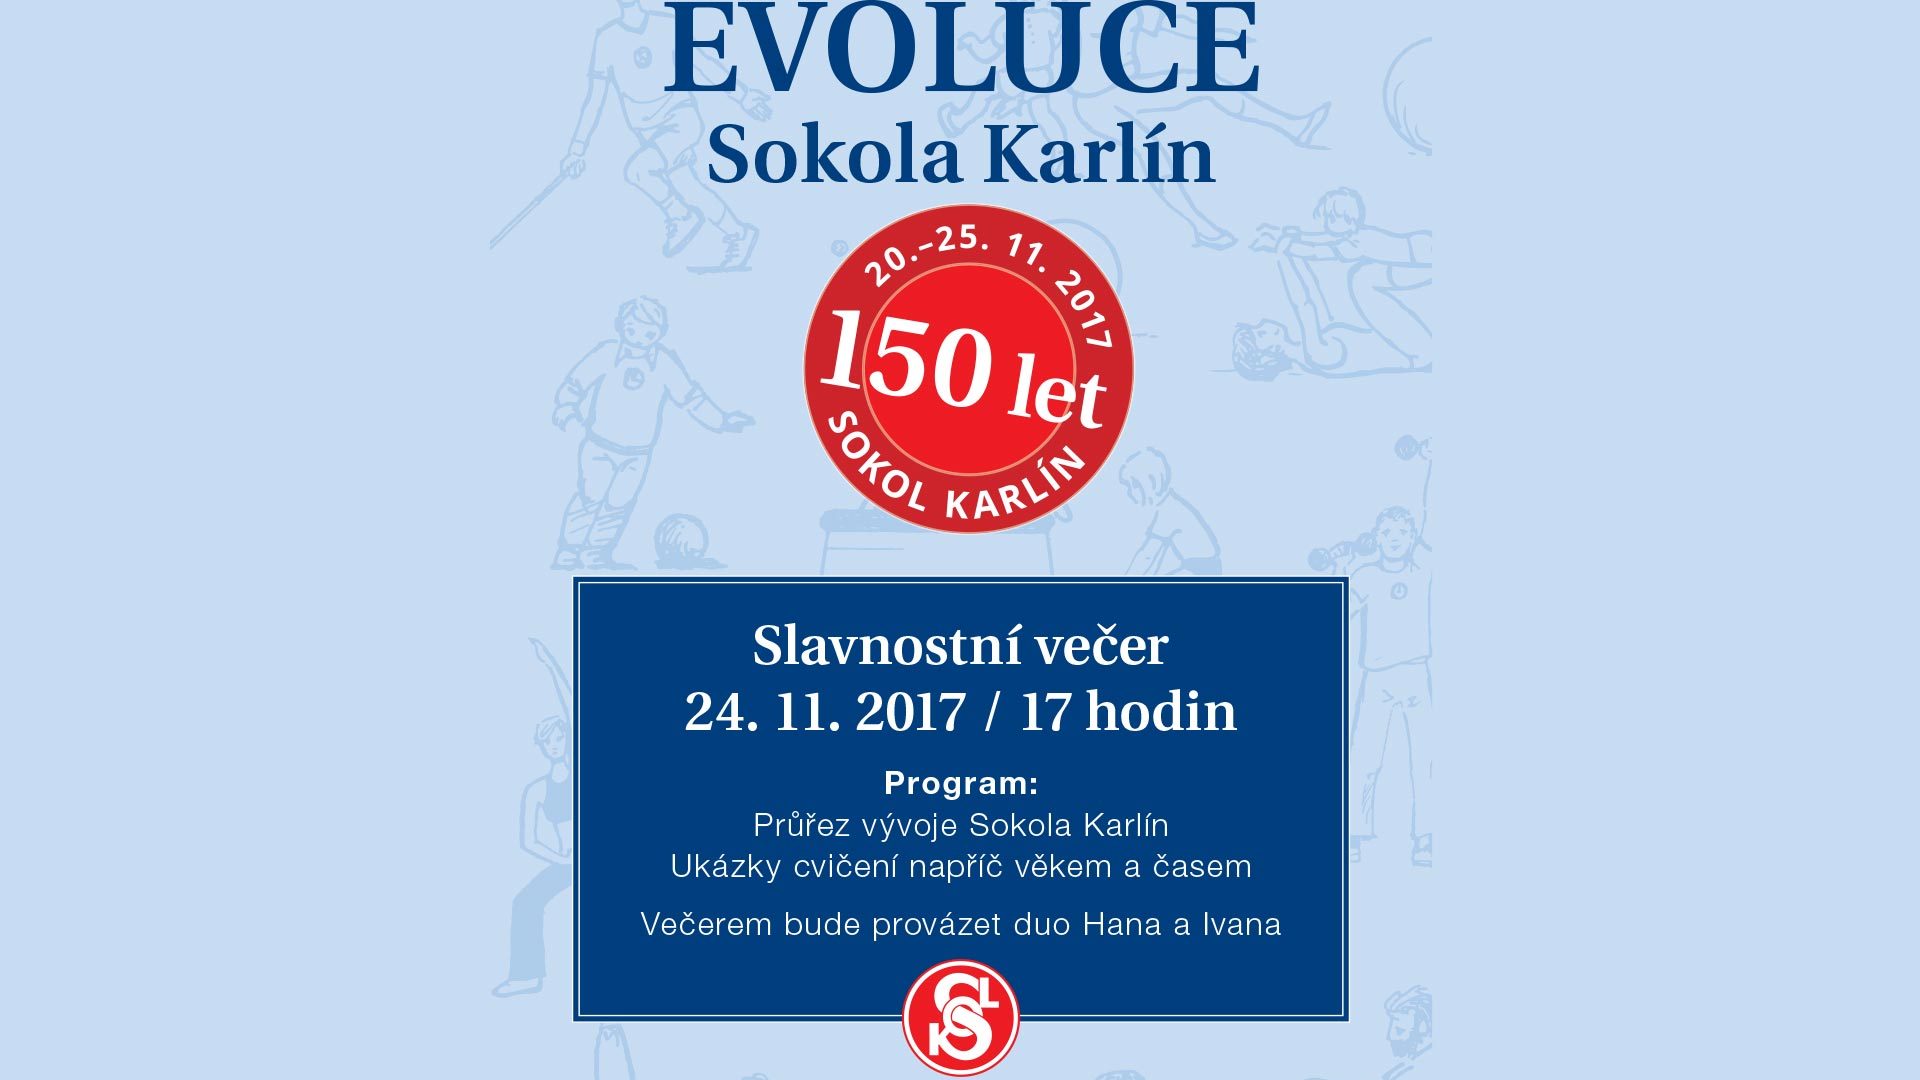 Evoluce Sokola Karlín